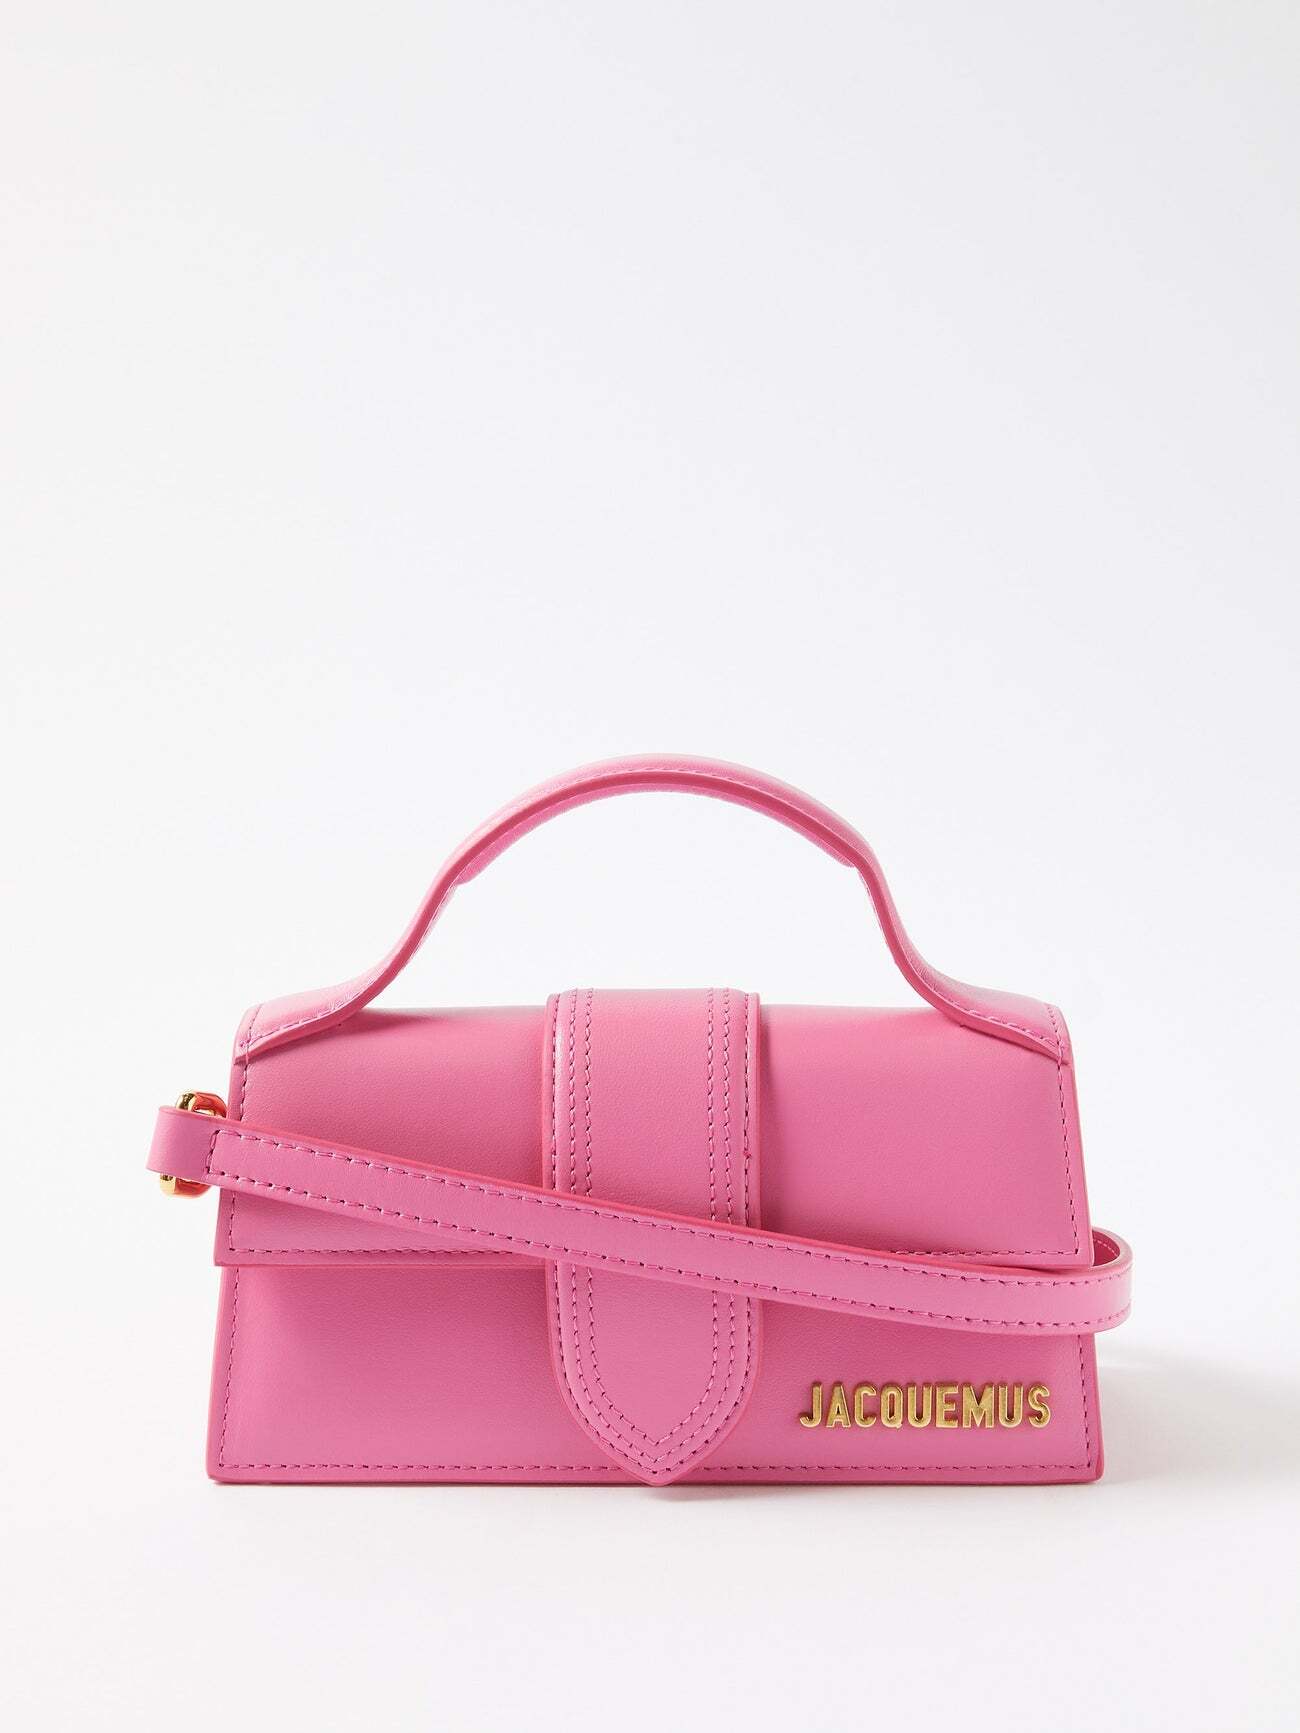 Jacquemus - Bambino Leather Bag - Womens - Pink